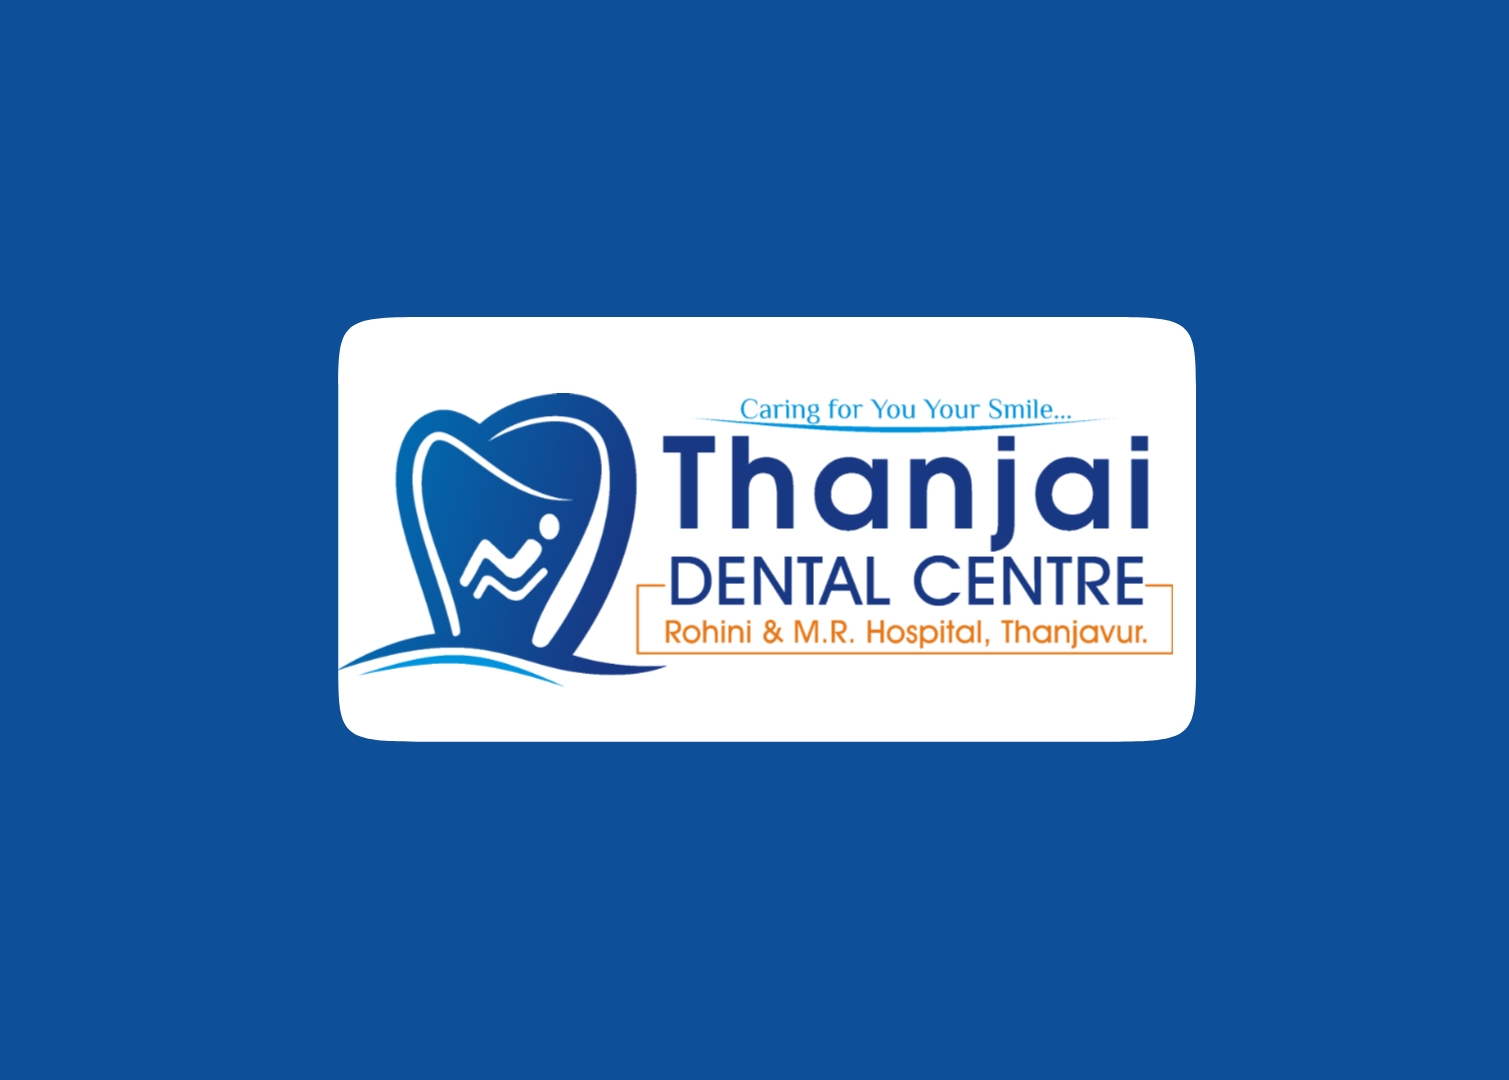 Thanjai dental centre|Veterinary|Medical Services